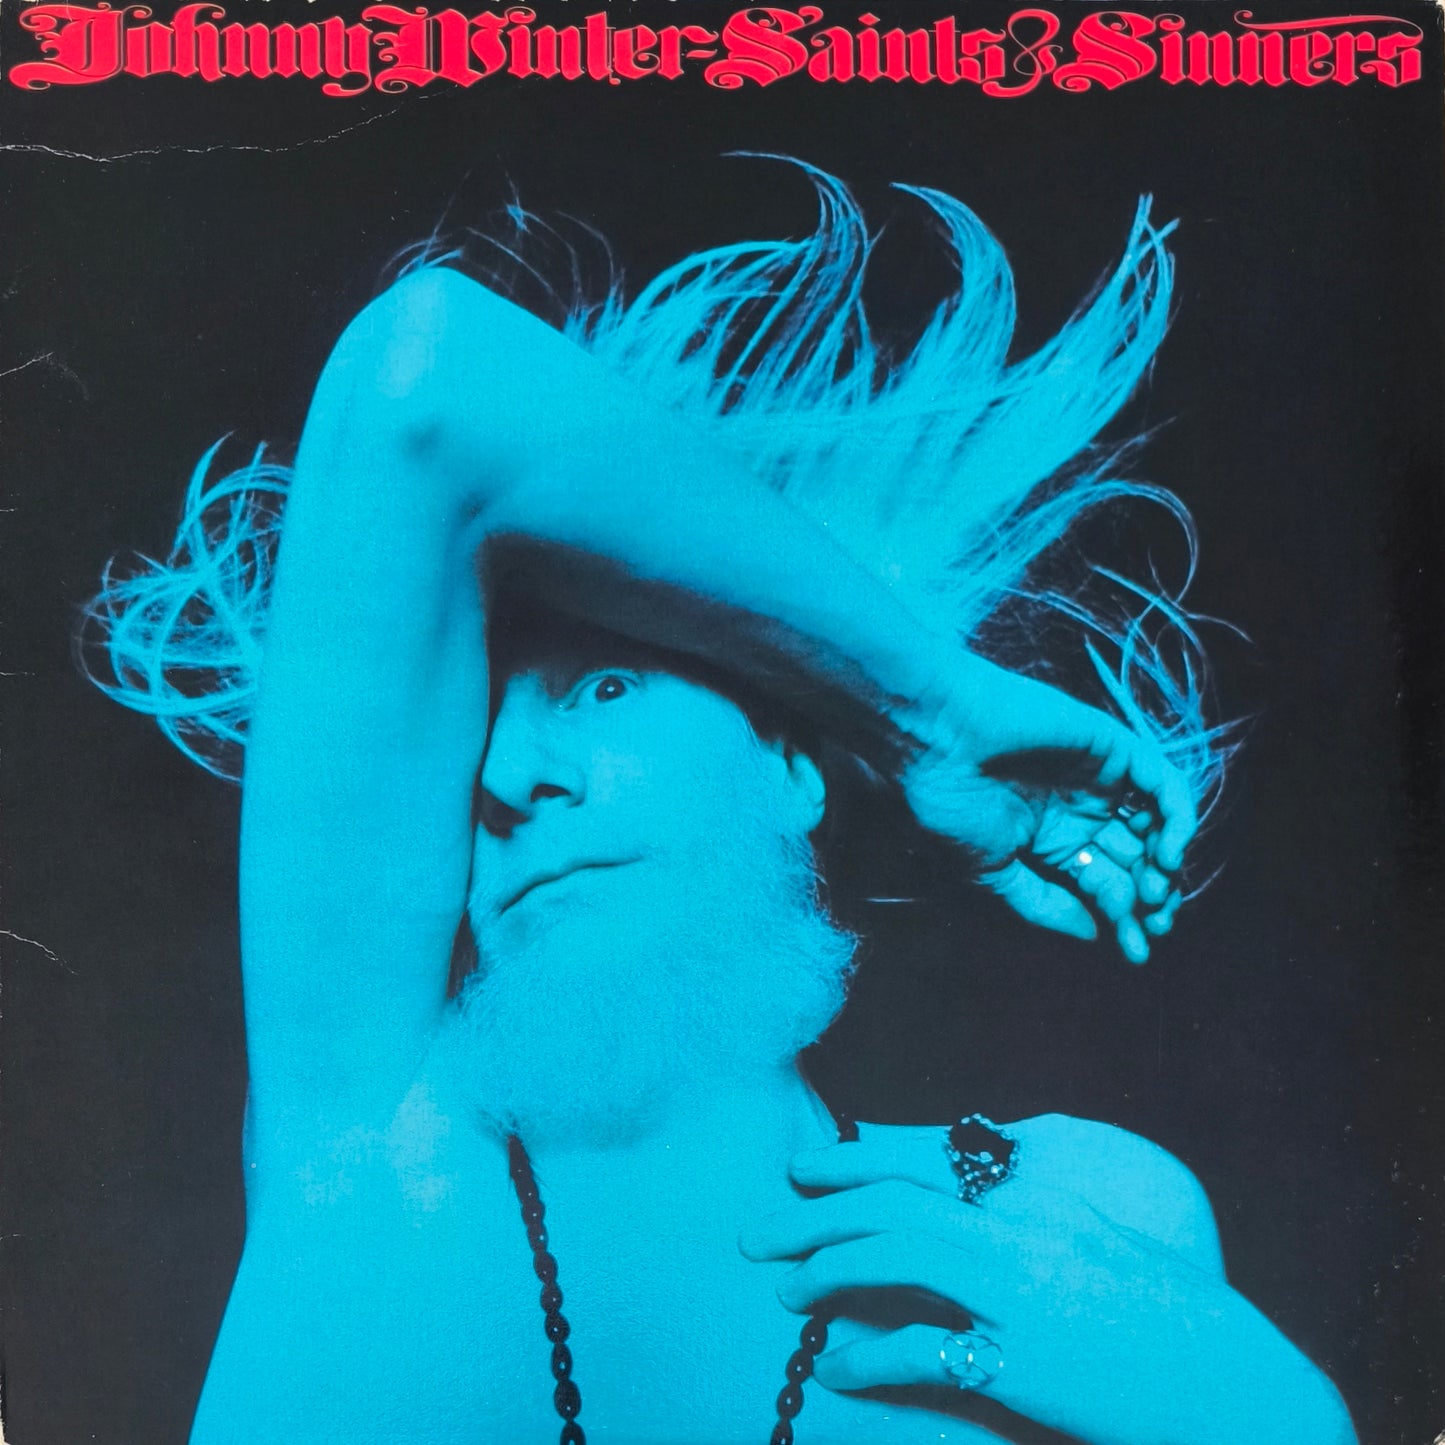 JOHNNY WINTER - Saints & Sinners (pressage US)